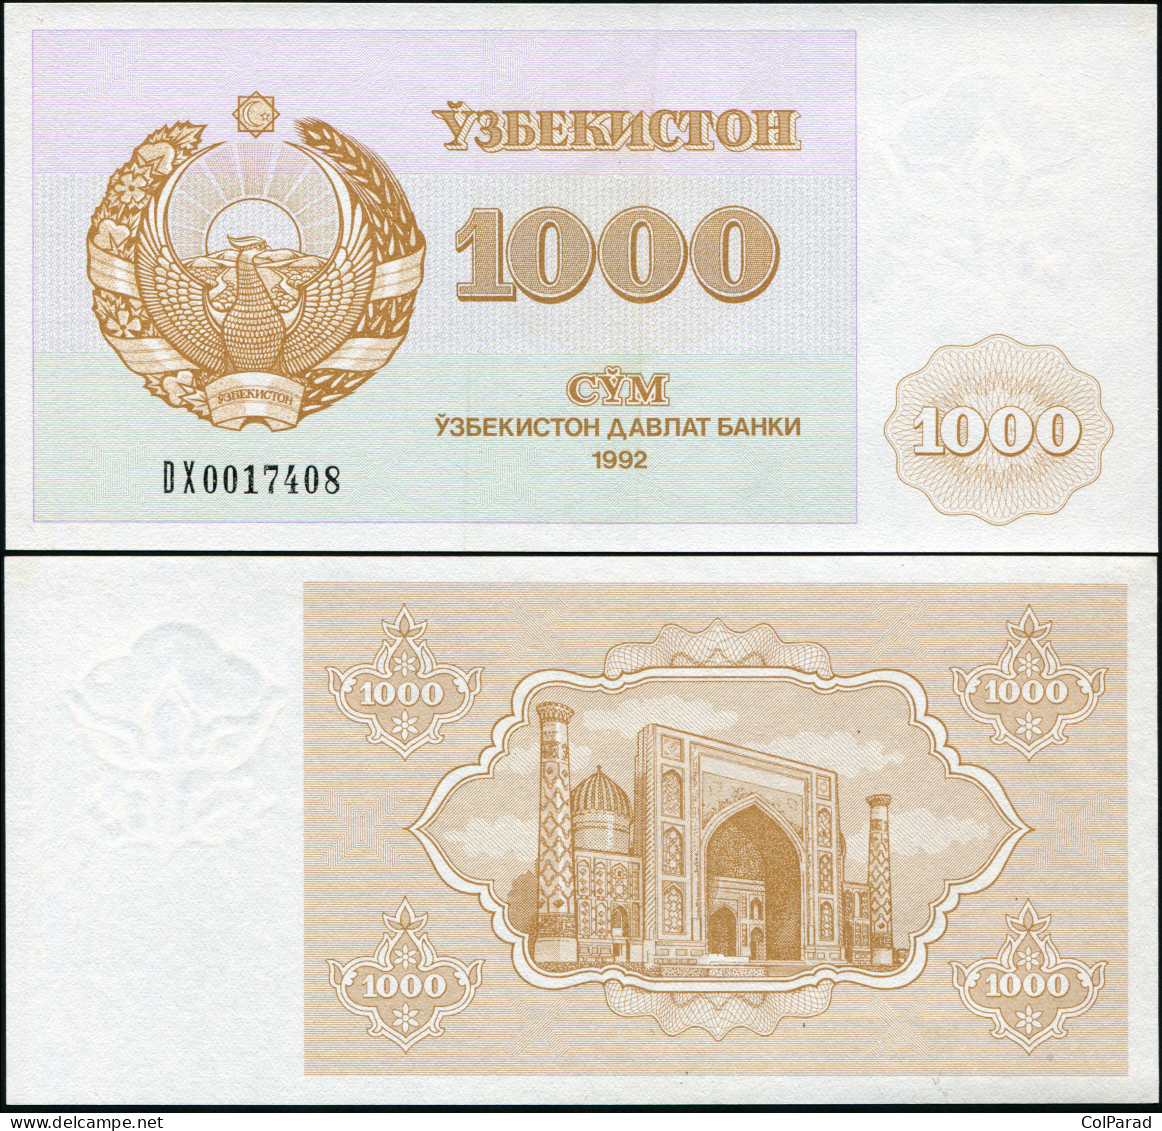 UZBEKISTAN 1000 SOM - 1992 (1993) - Paper Unc - P.70a Banknote - Uzbekistan